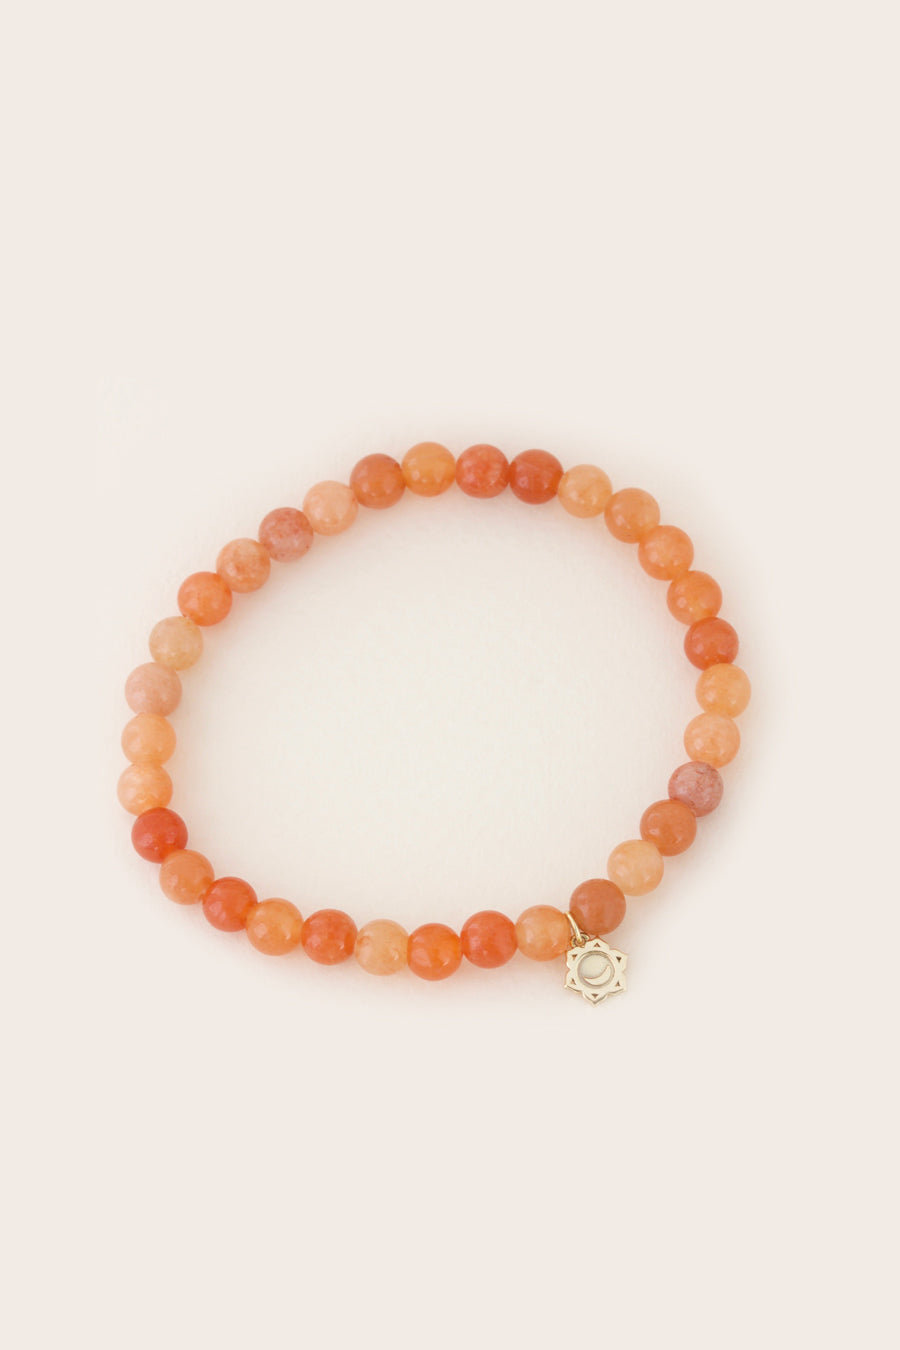 Sacral Chakra Gemstone Orange Bracelet Meditation Gold